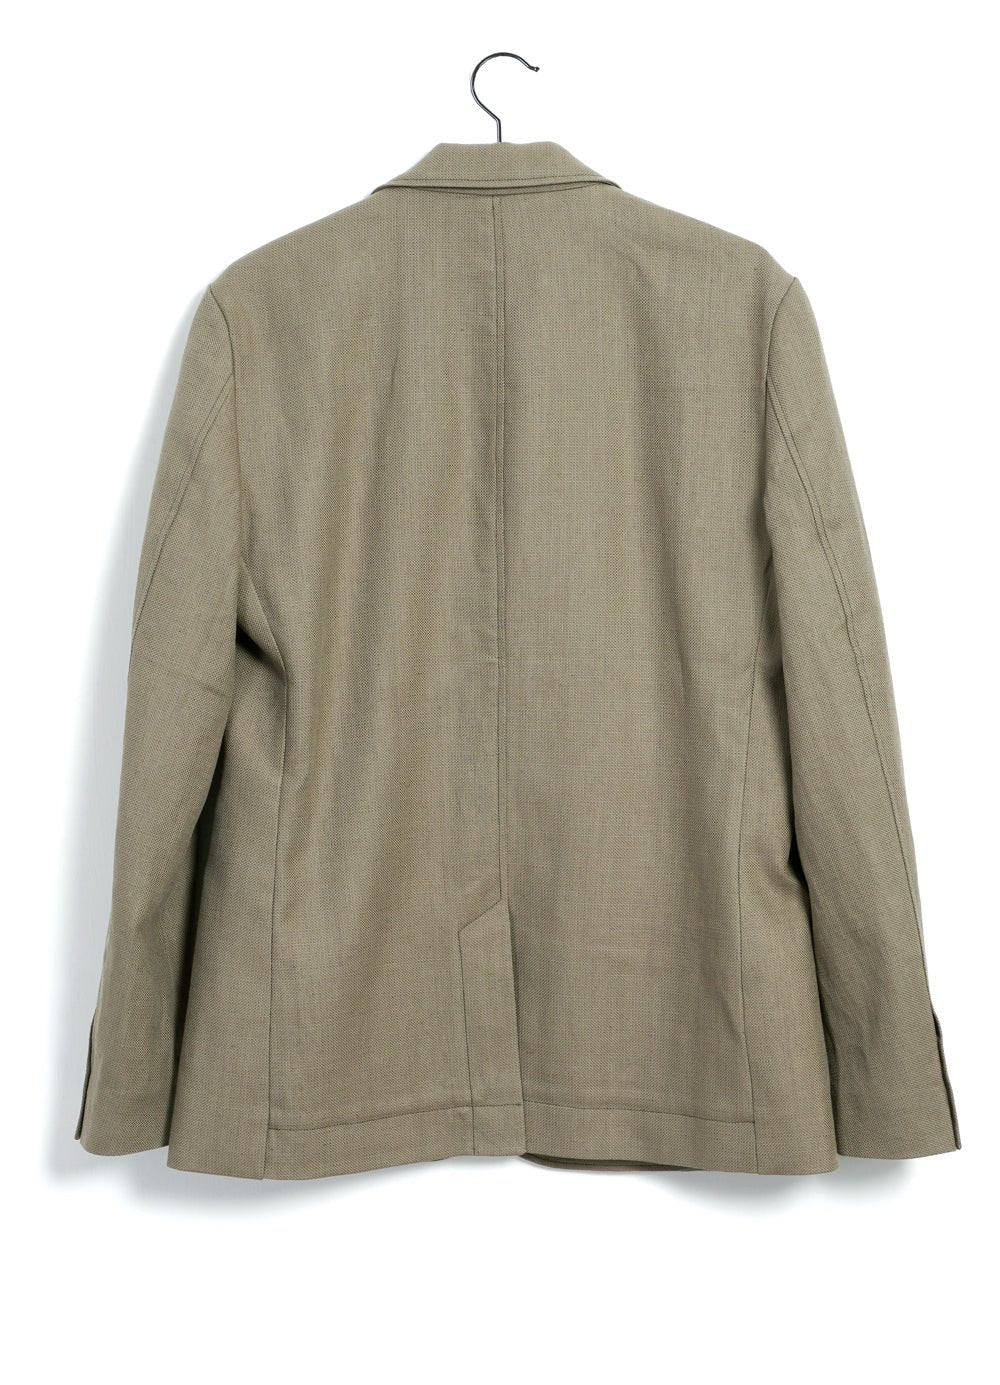 HANSEN GARMENTS - CHRIS | Classic Two Button Blazer | Bay Leaf - HANSEN Garments